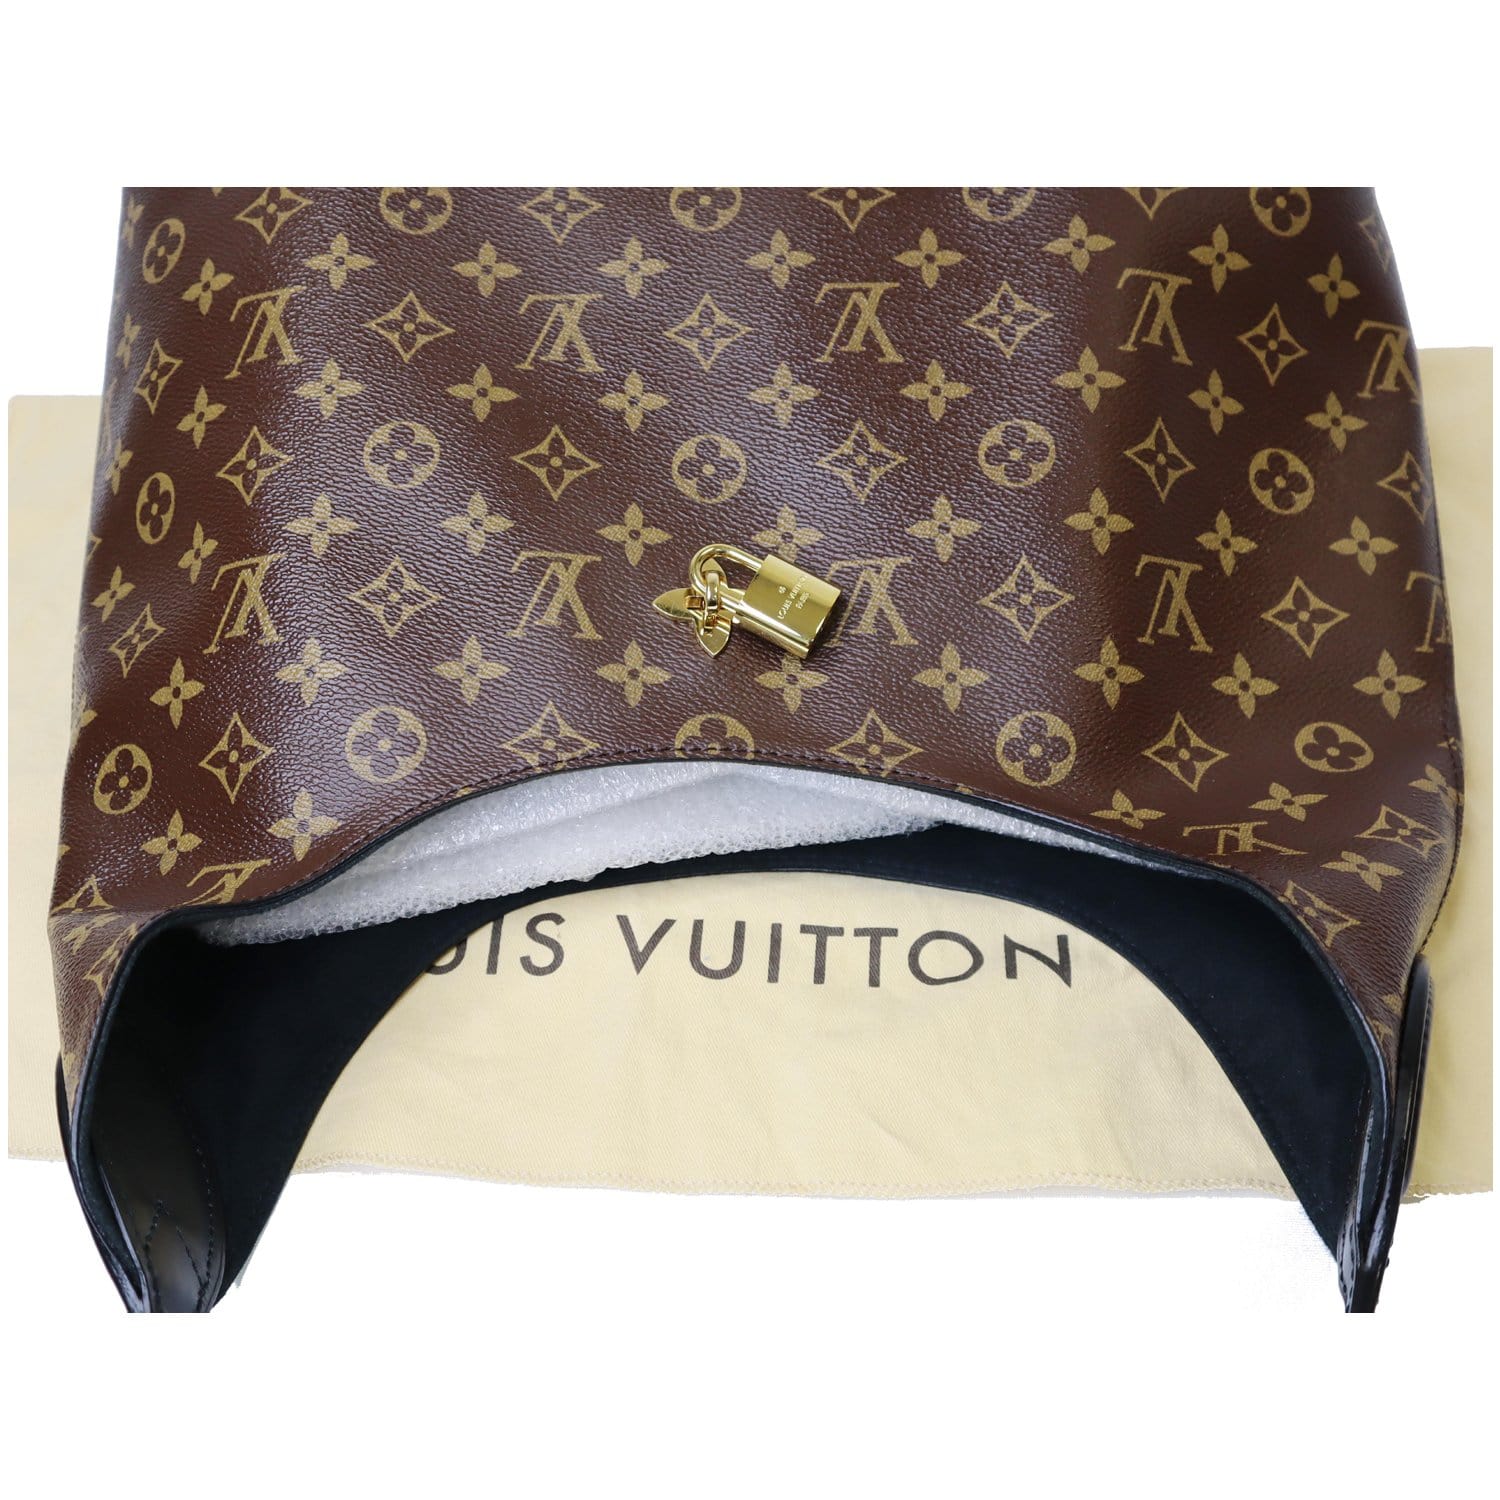 Authenticated used Louis Vuitton Louis Vuitton Flower Hobo Shoulder Bag M43545 Monogram Canvas Leather Brown Semi-Shoulder One Tote, Adult Unisex